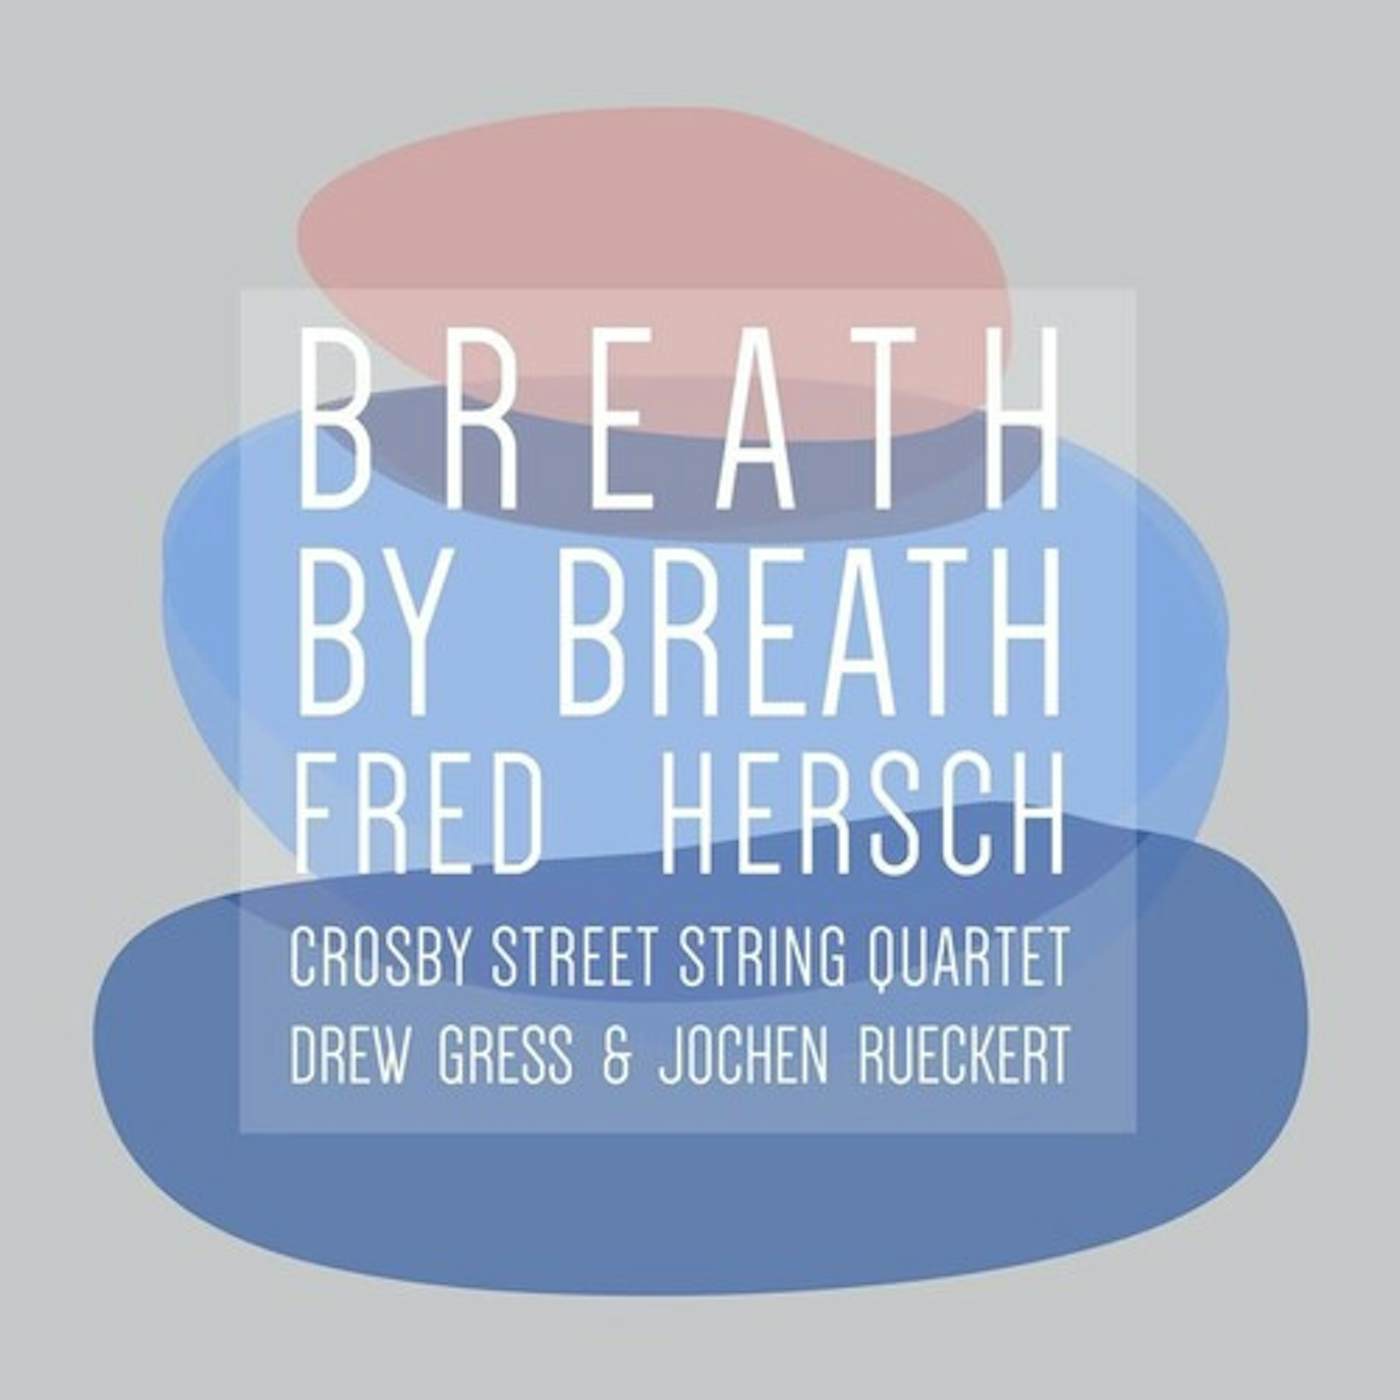 Fred Hersch BREATH BY BREATH CD